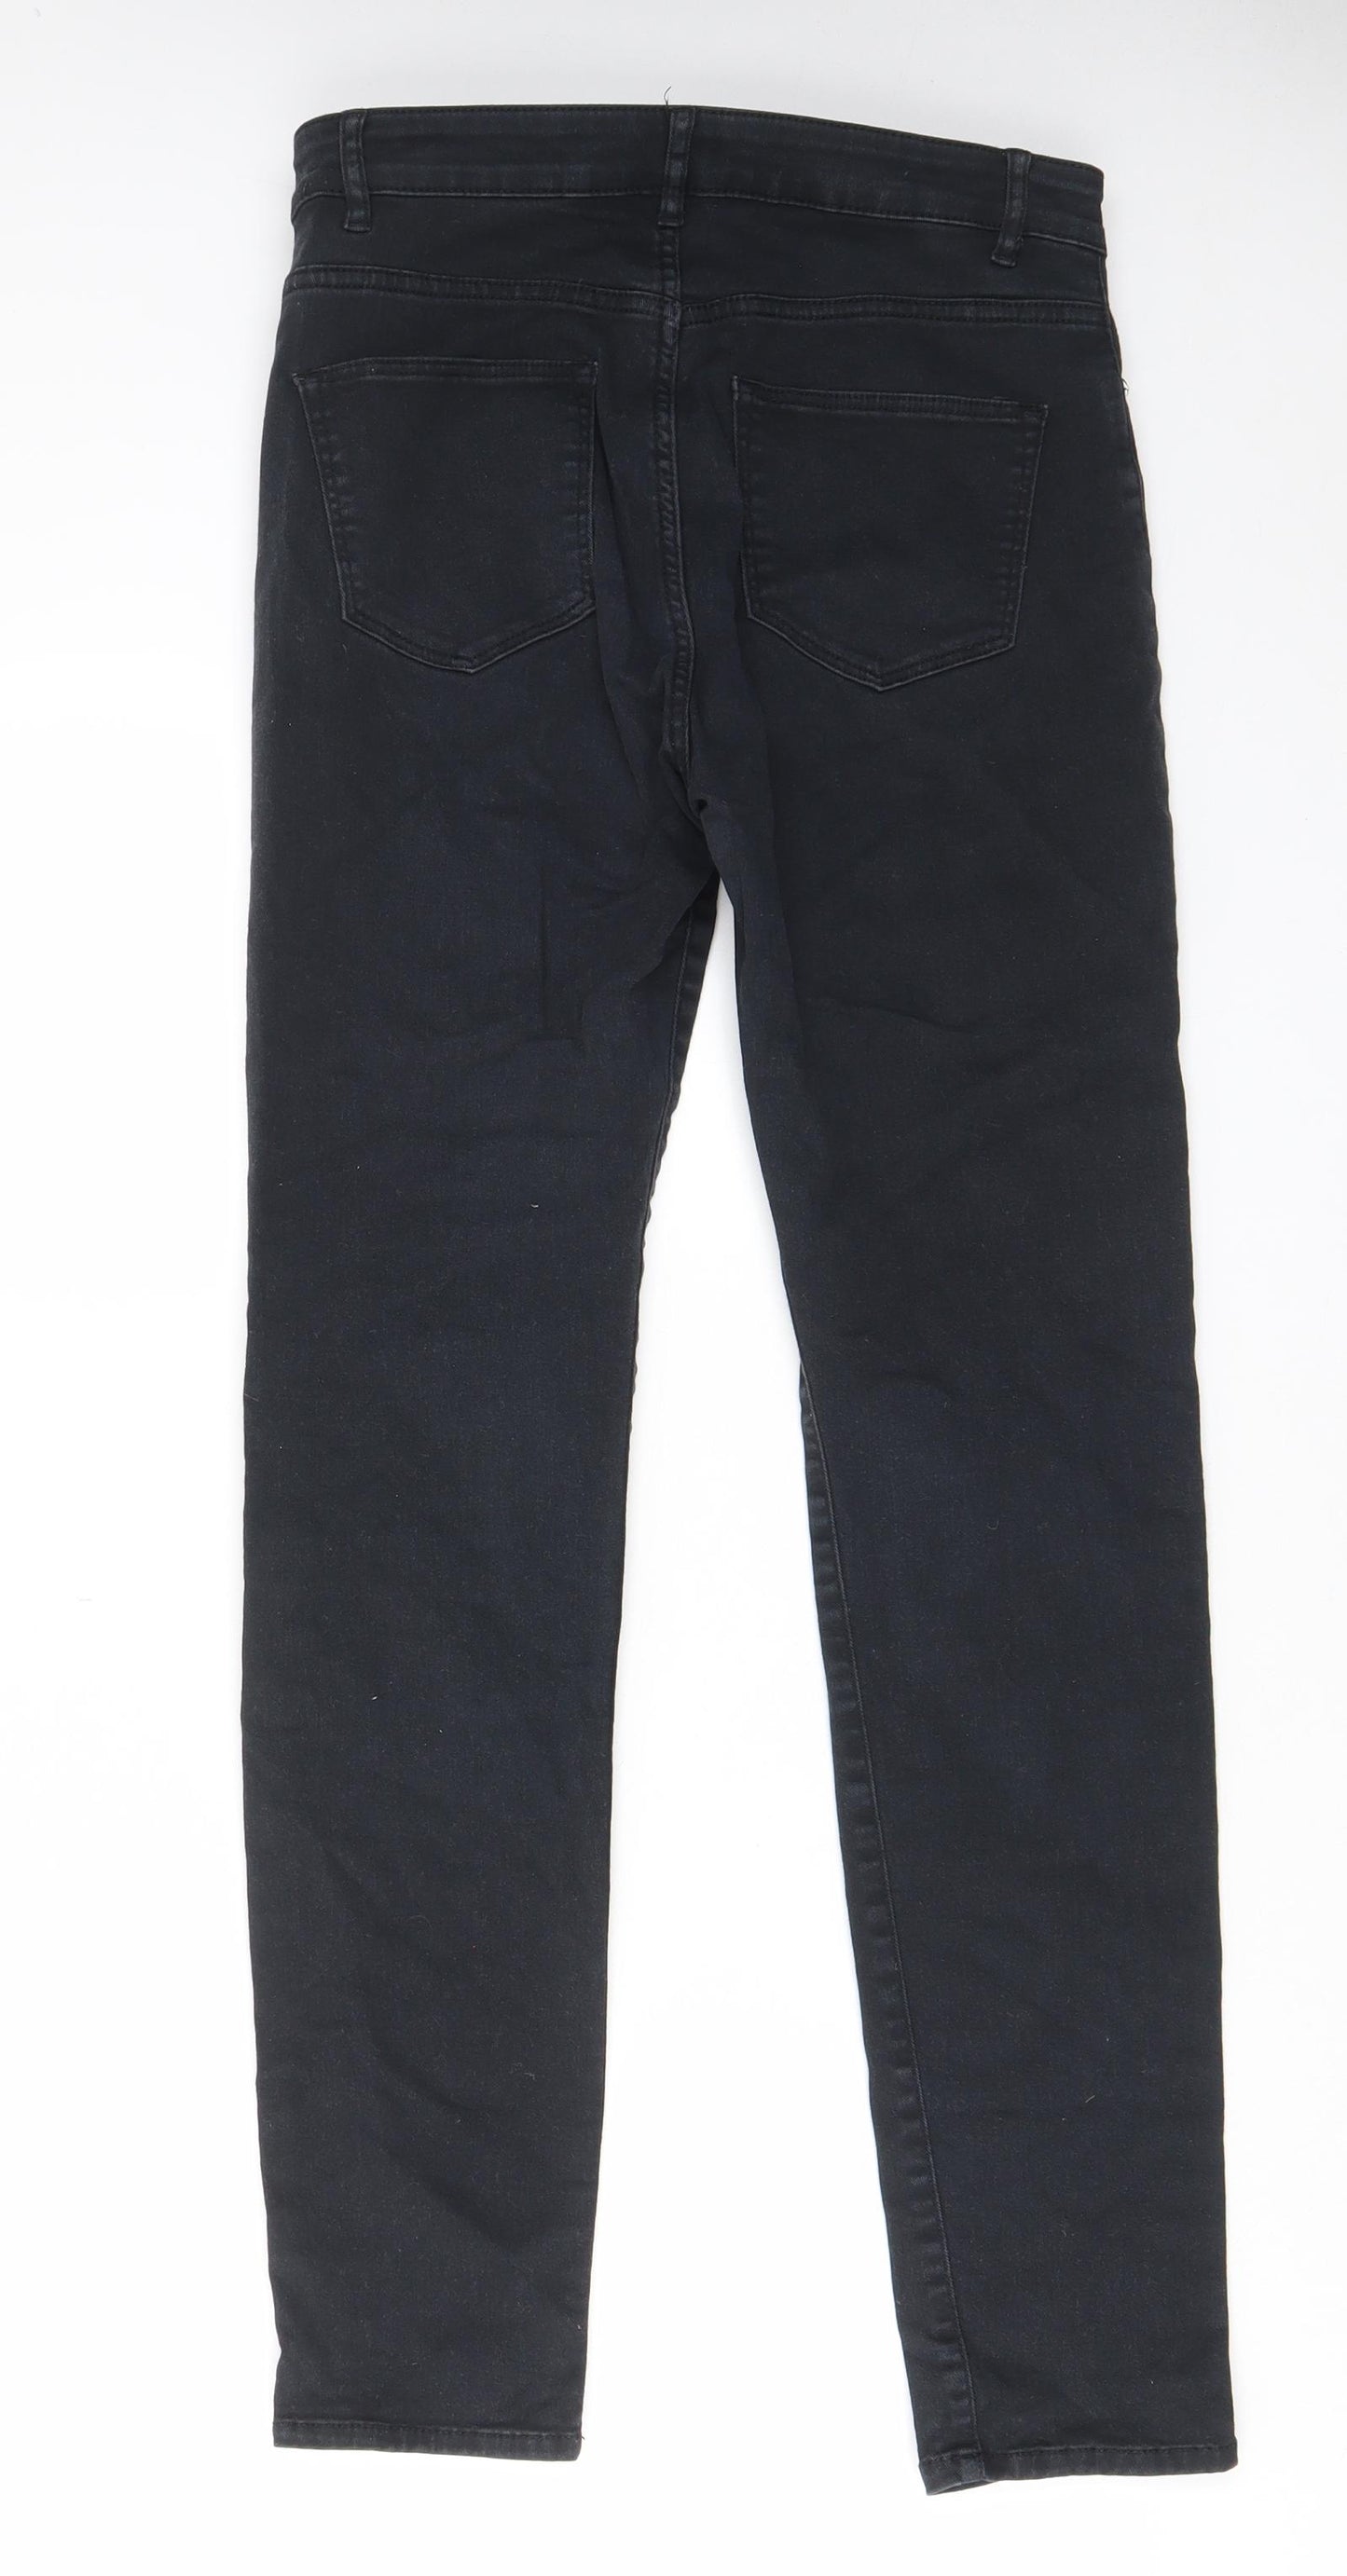 H&M Womens Black Cotton Skinny Jeans Size 10 L29 in Regular Zip - Pockets, Belt Loops